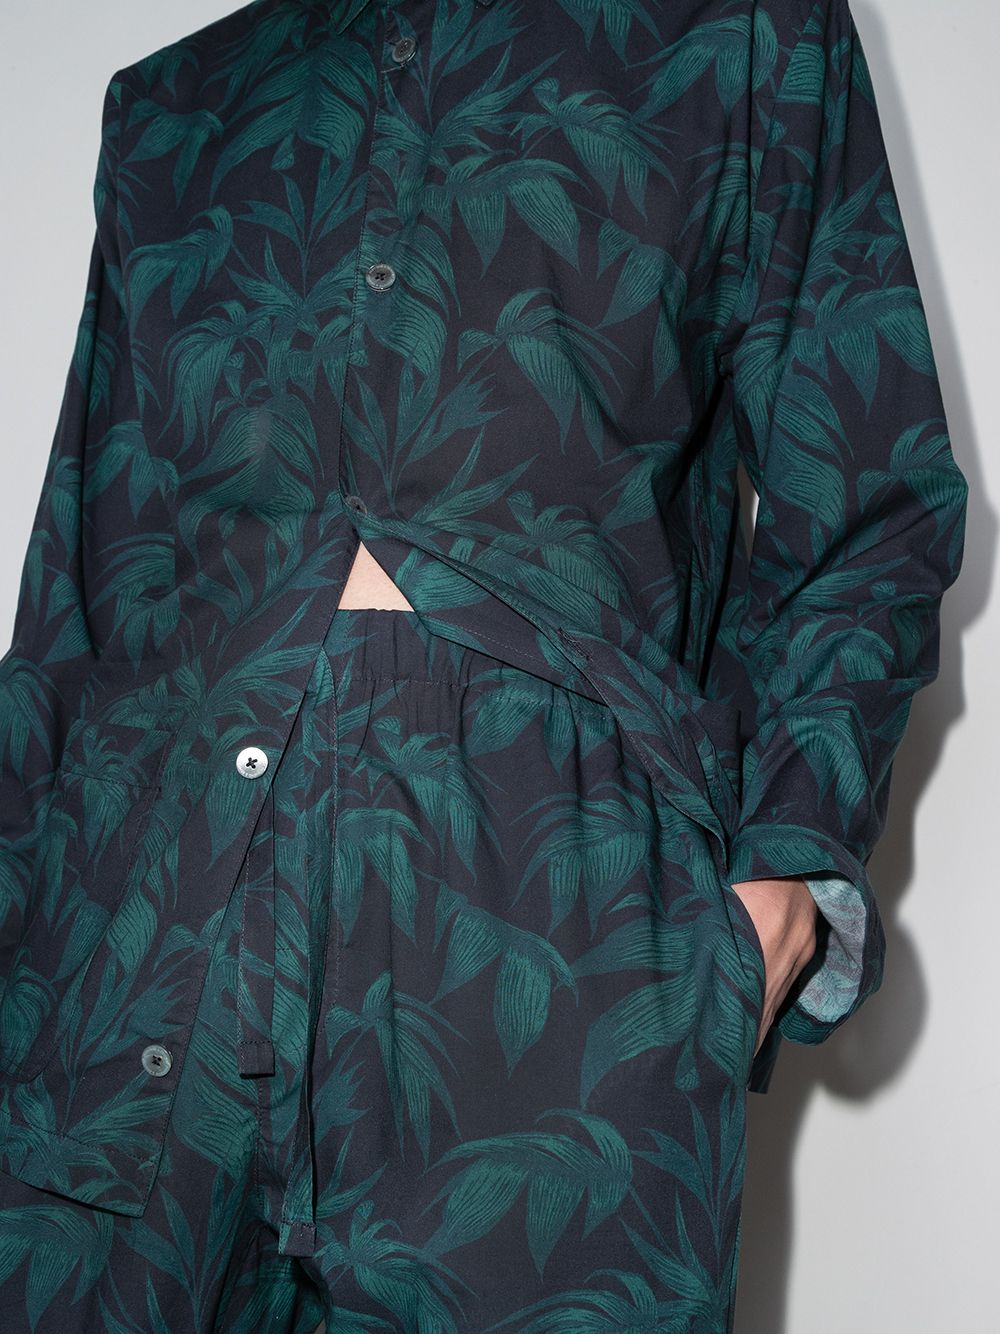 фото Desmond & dempsey byron tropical-print pajama set